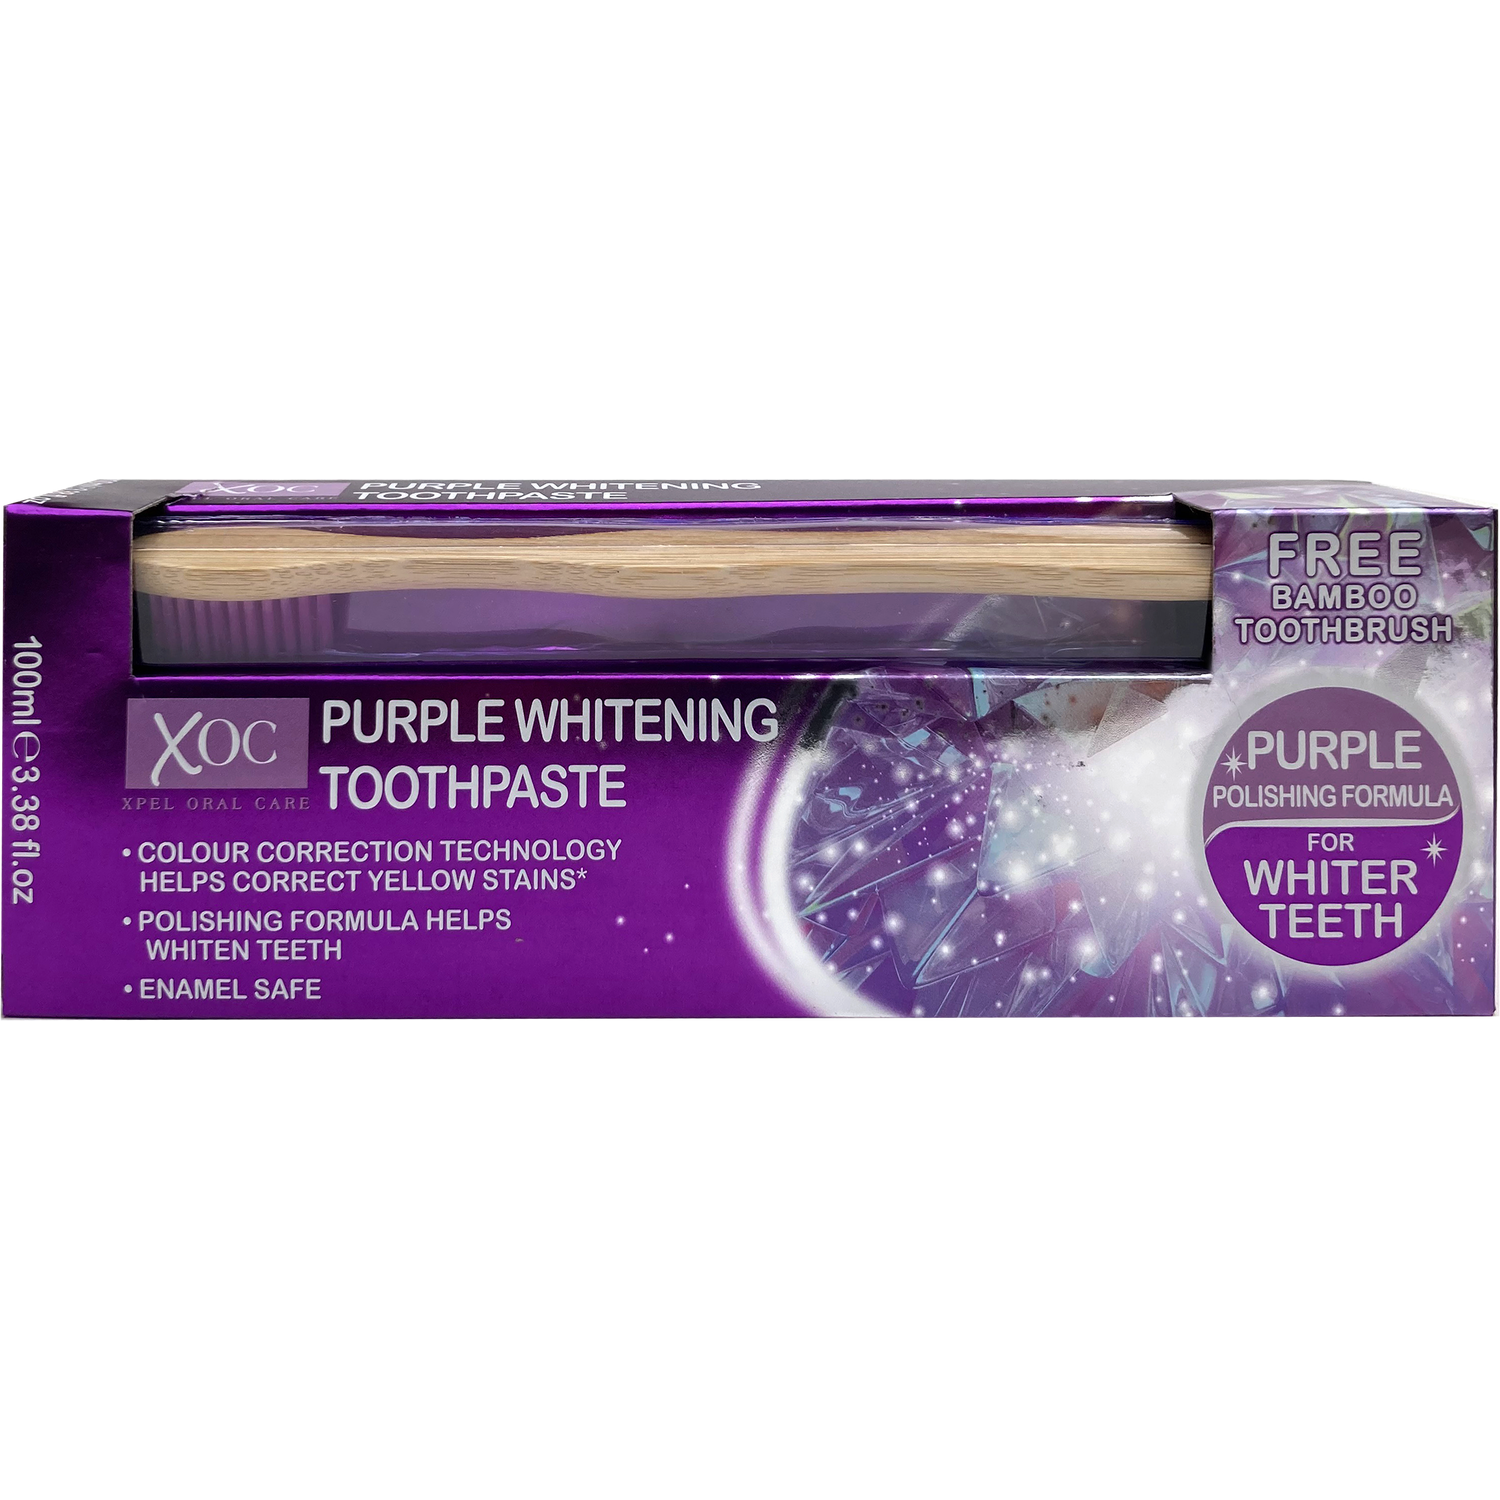 XOC Purple Whitening Toothpaste and Toothbrush - Purple Image